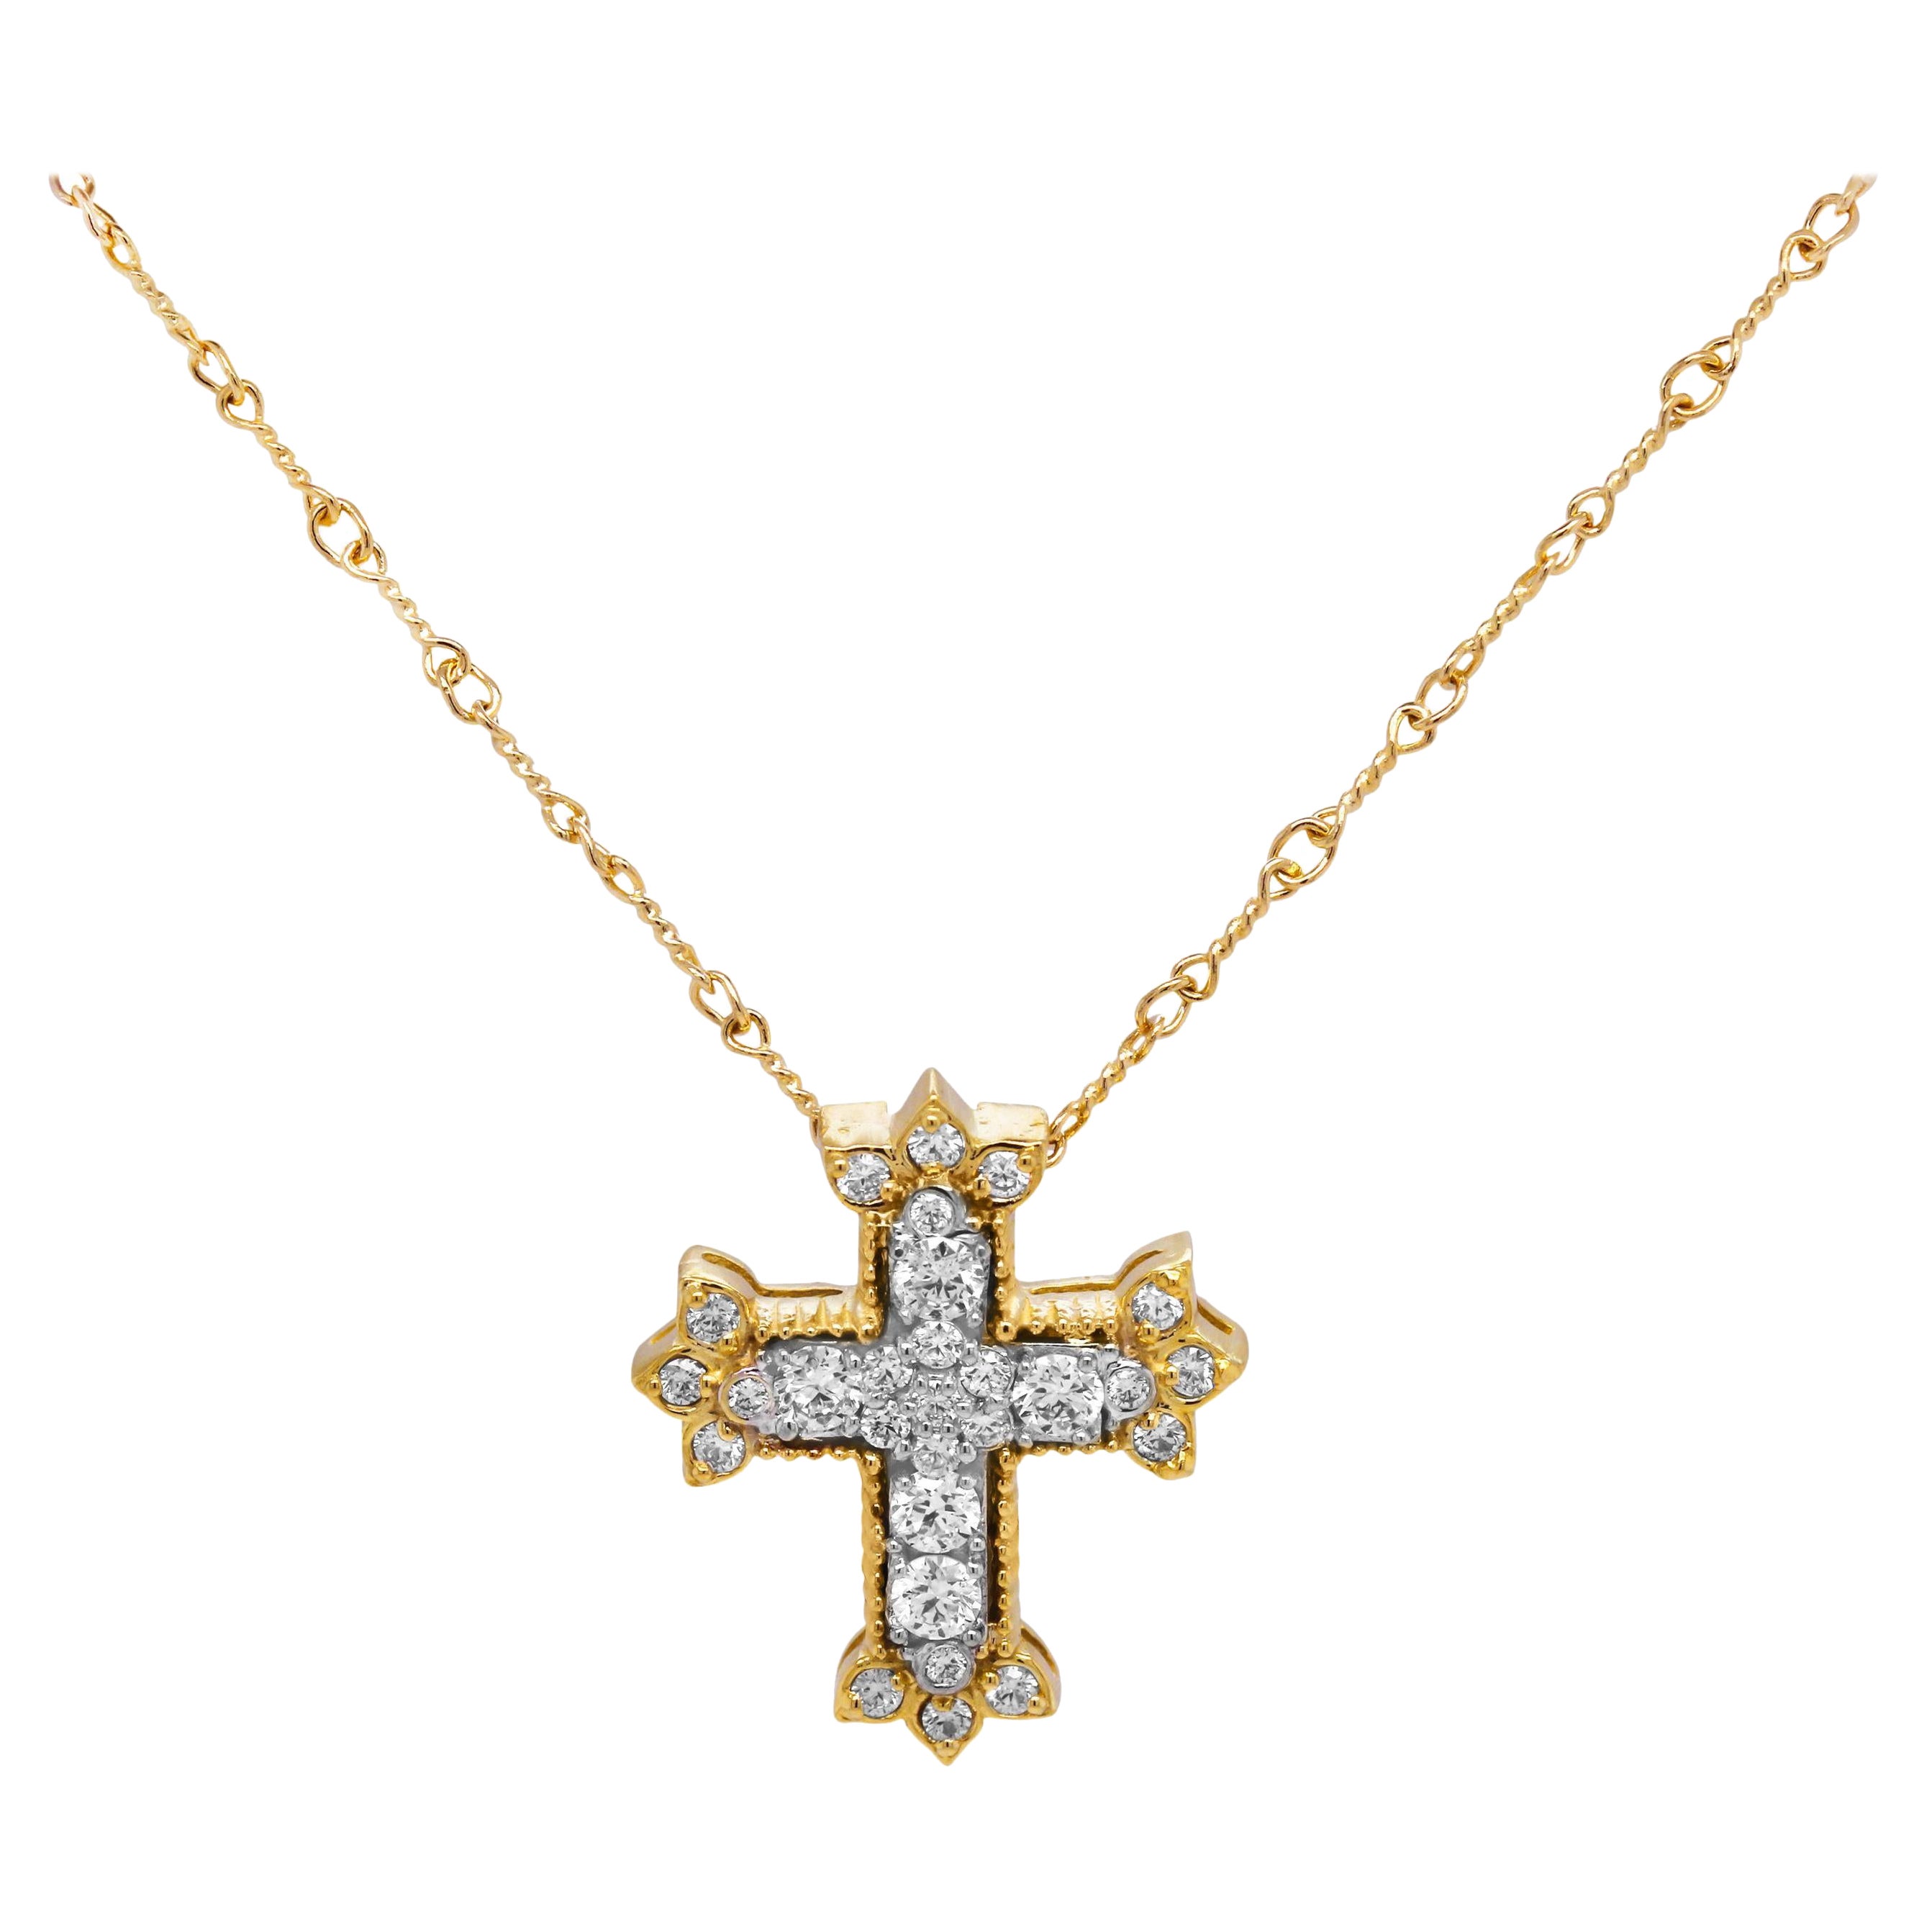 Stambolian, collier pendentif croix en or jaune et blanc 18 carats et diamants